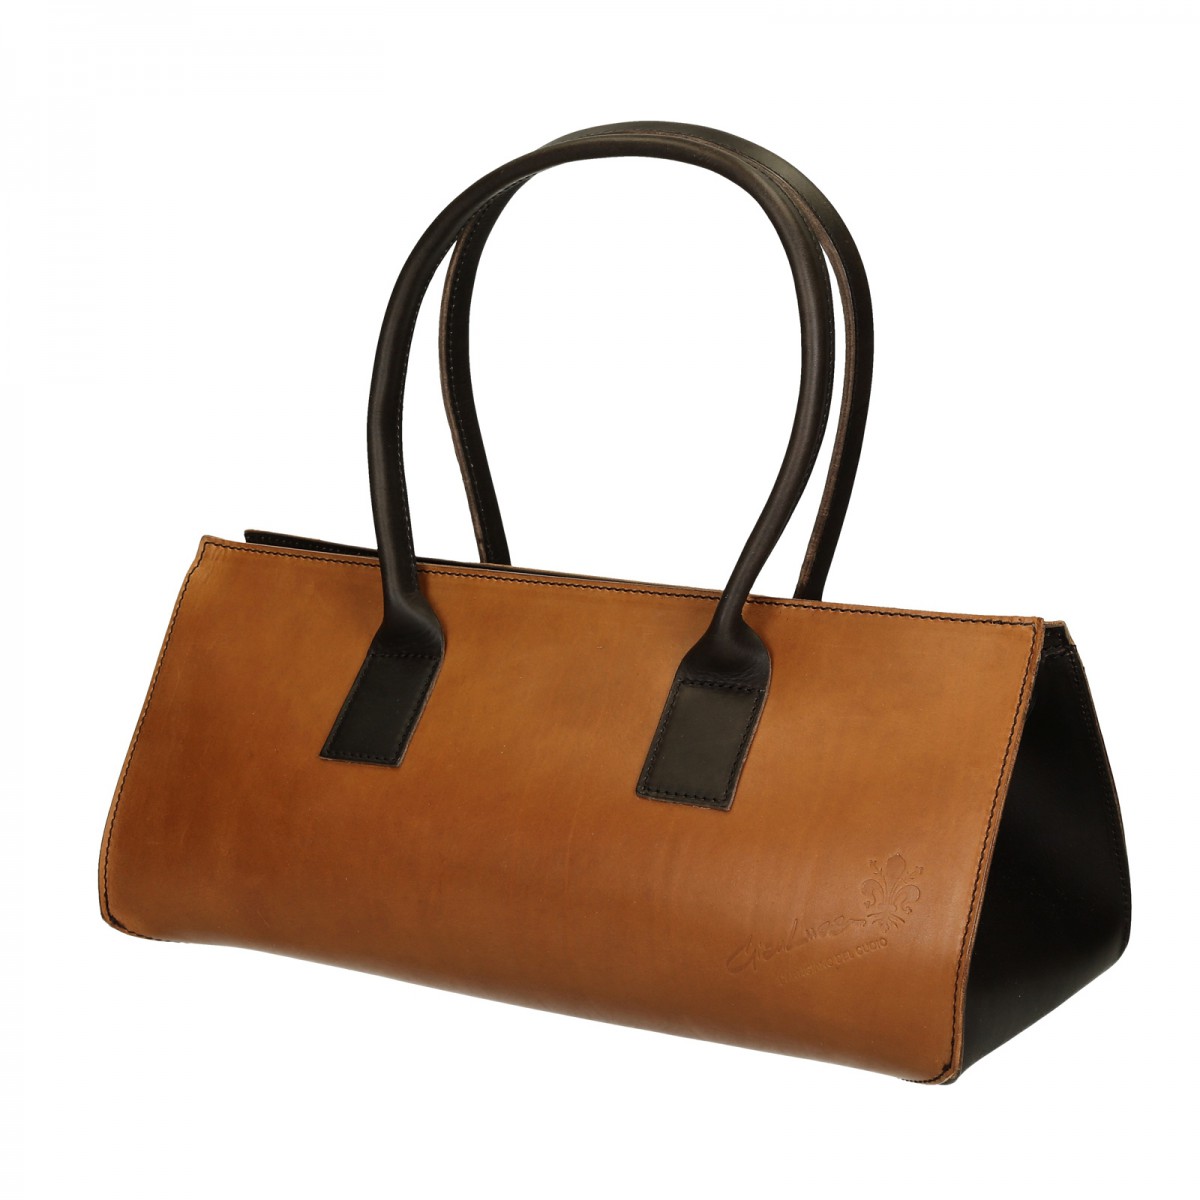 Italian leather handbag for women Handmade in Italy | Gianluca - The leather craftsman